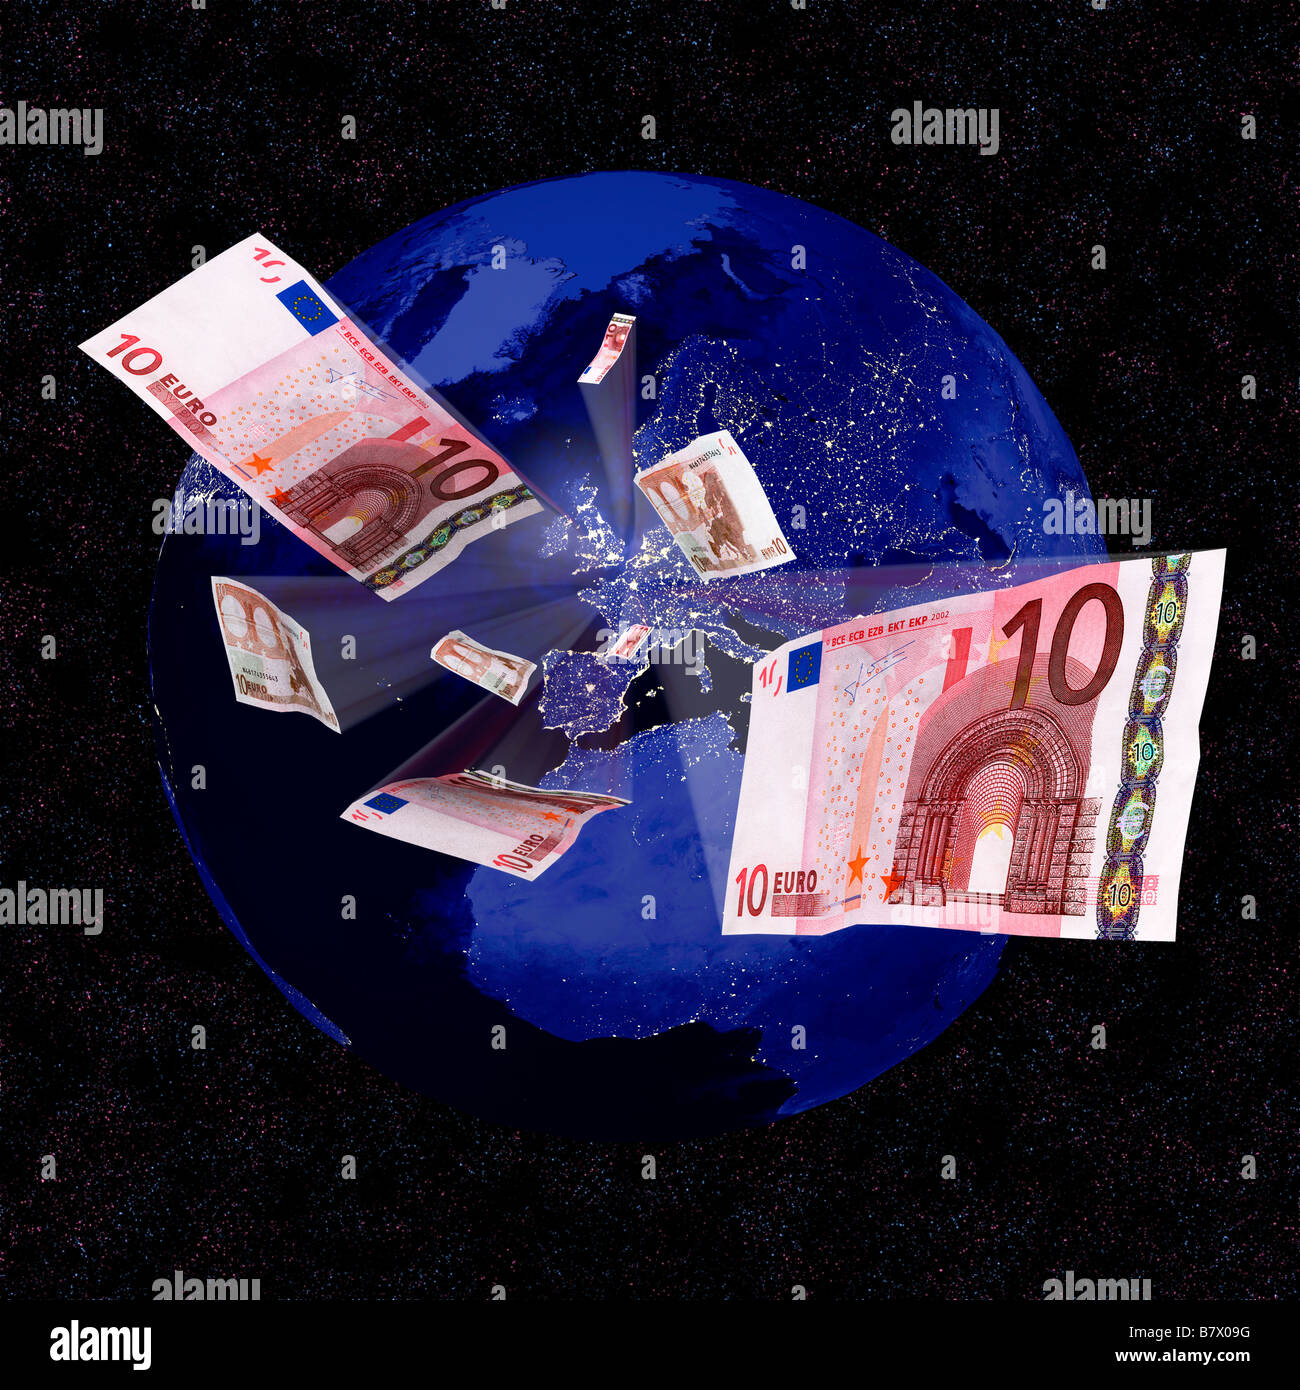 Euro concept - money flying out of the European Eurozone region on an illuminated globe - digital composite Stock Photo